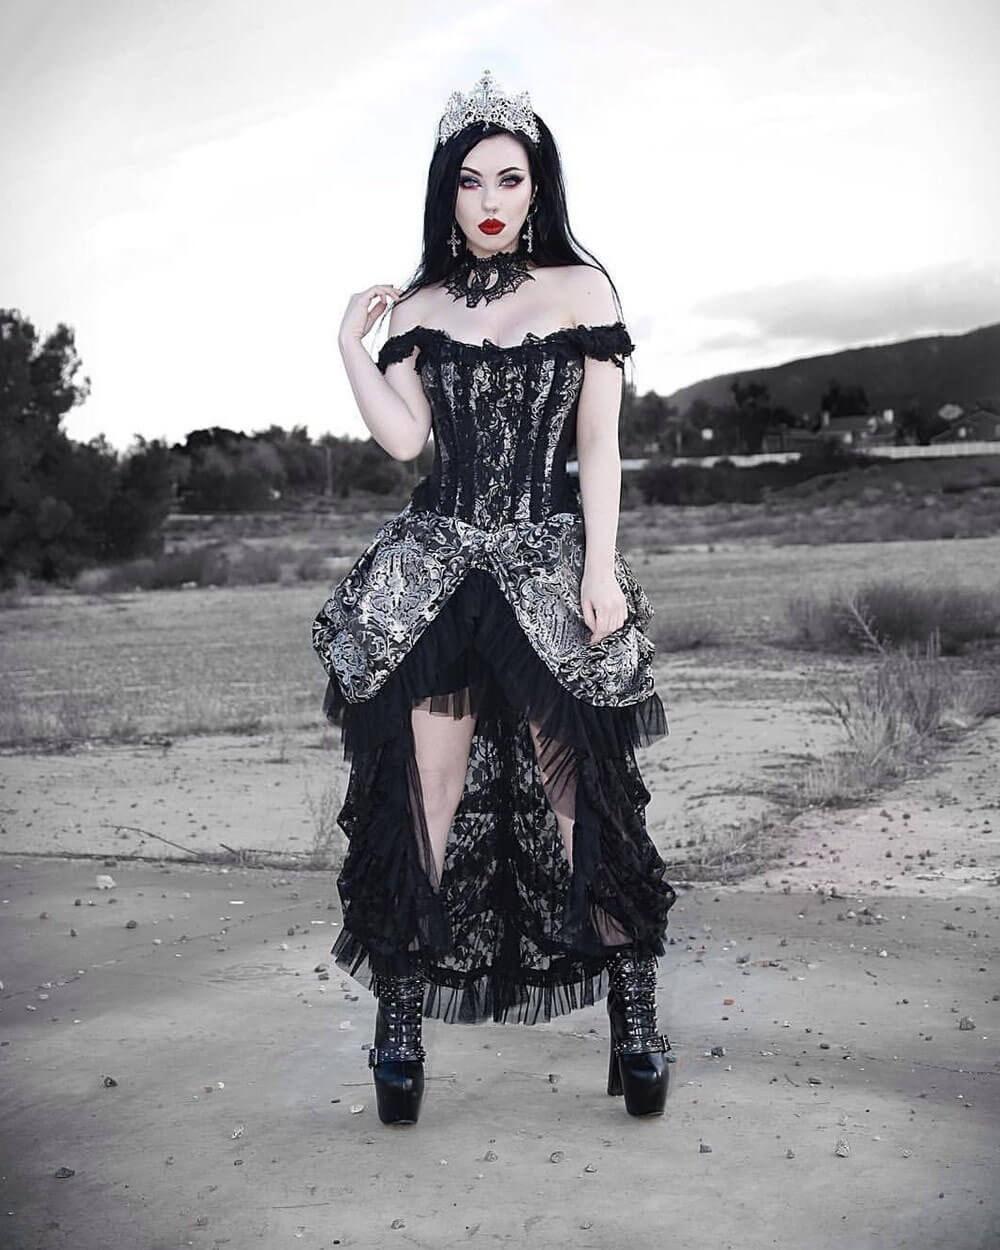 Burleska gothic fashion